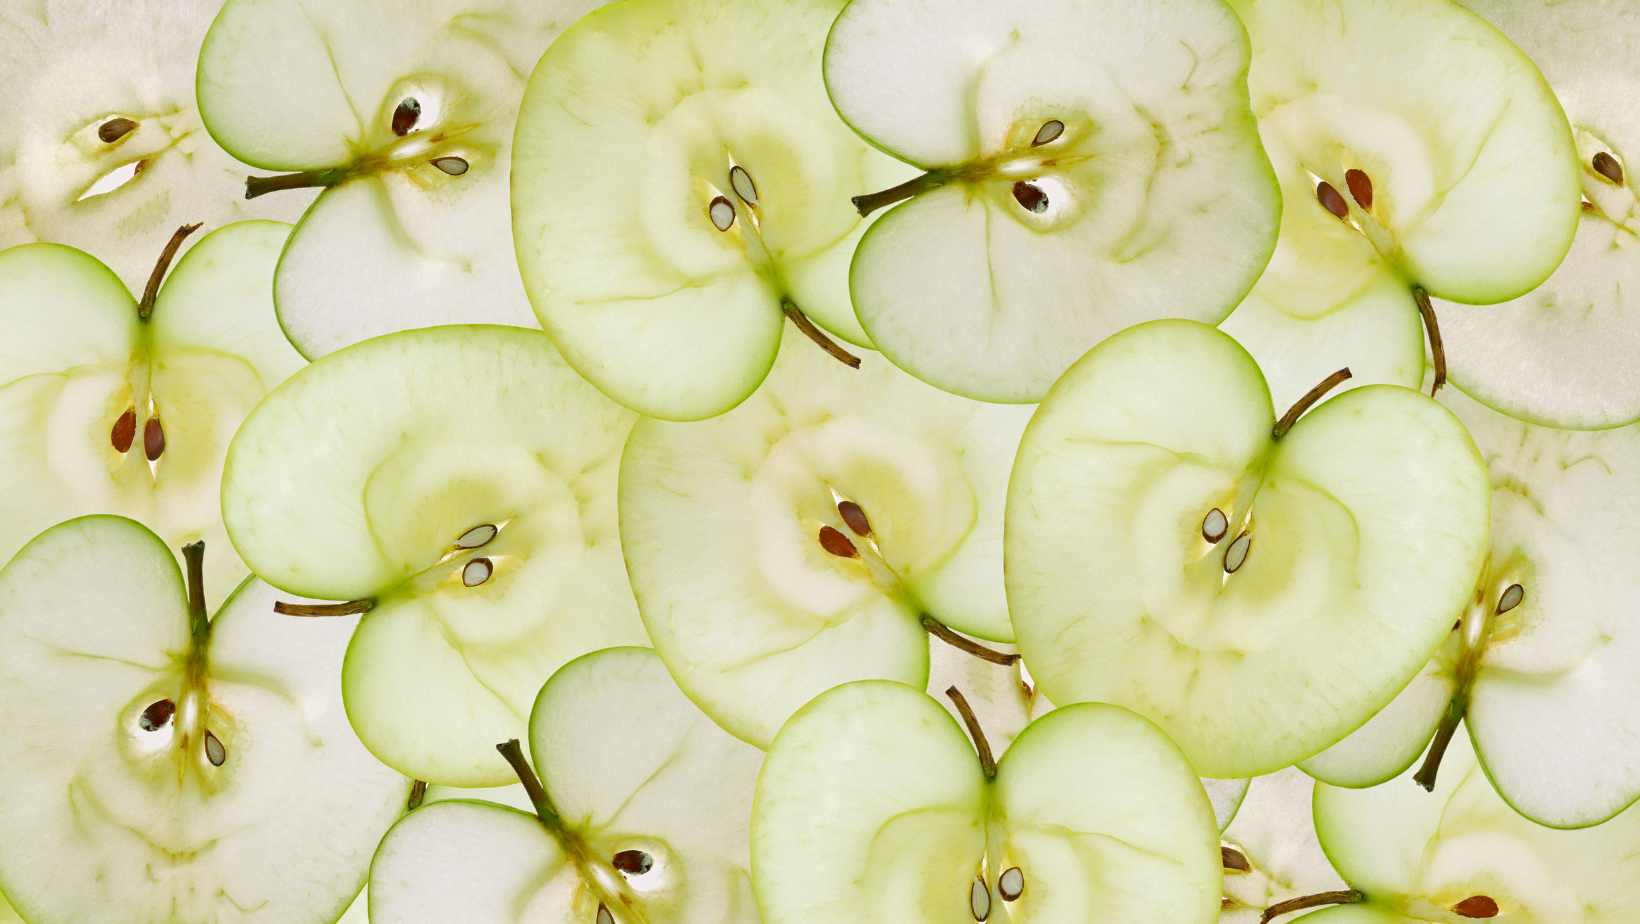 Sliced green apples